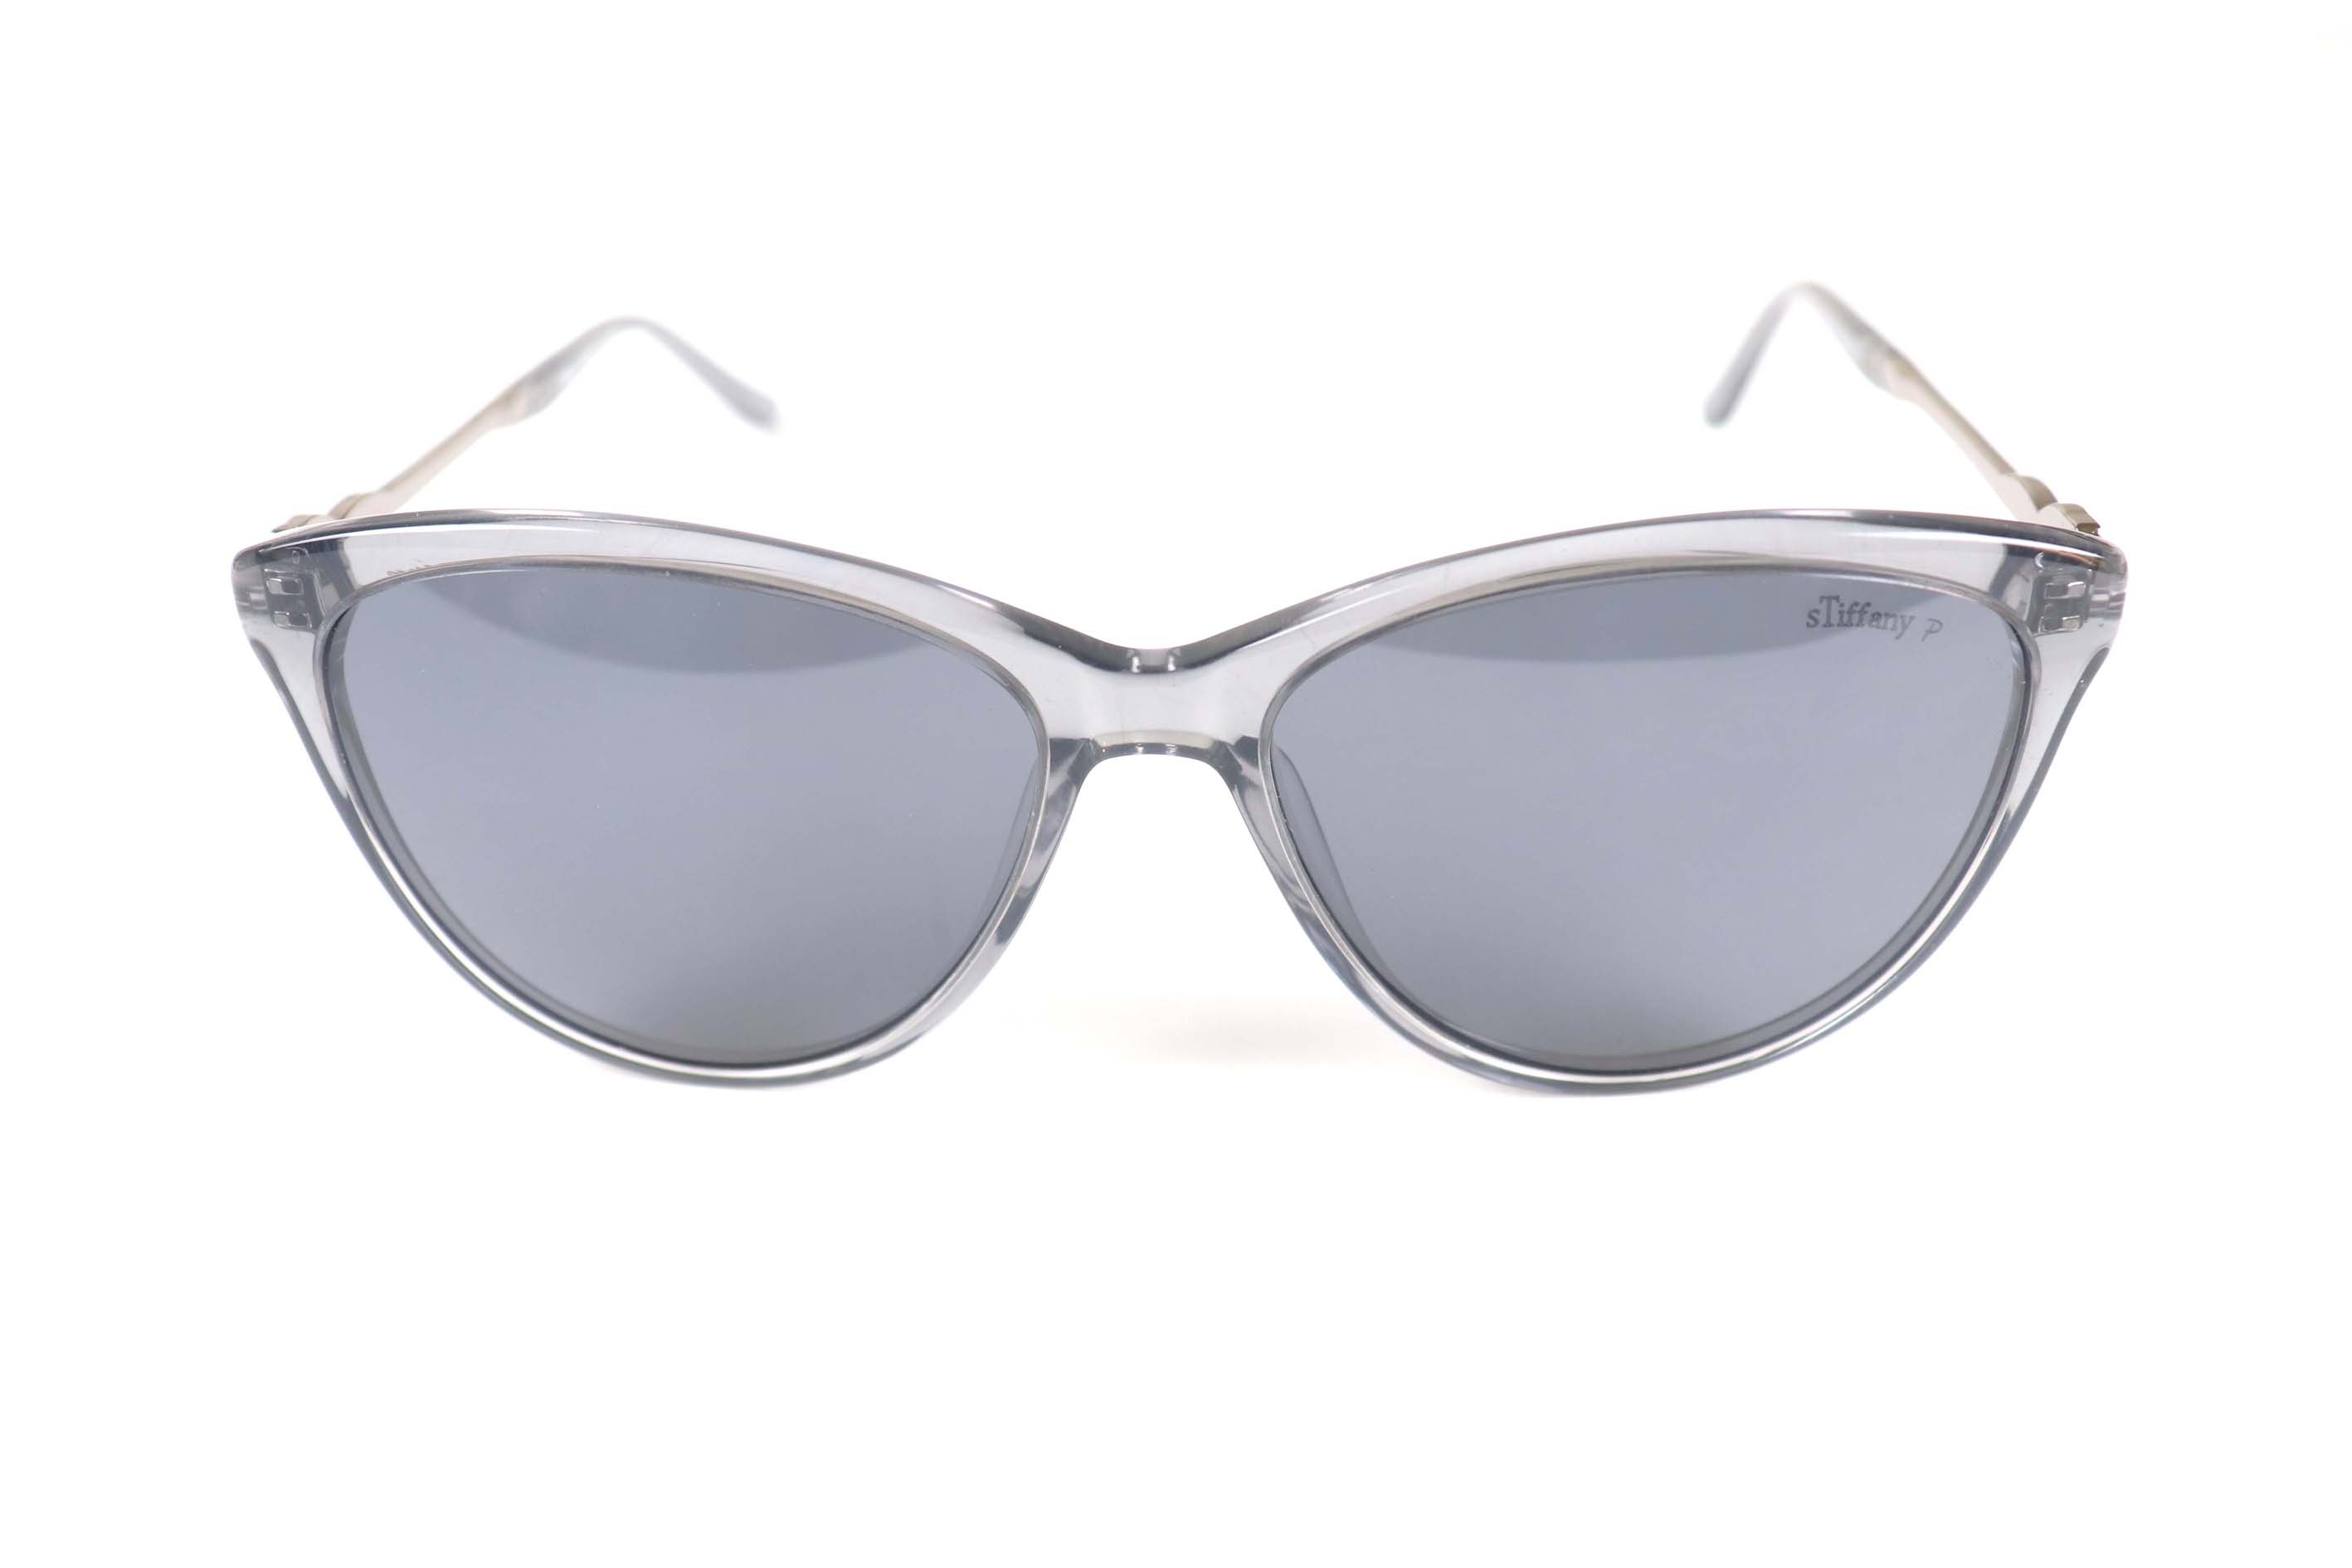 Stiffany Sunglasses-oR-OAK19086-C3-S